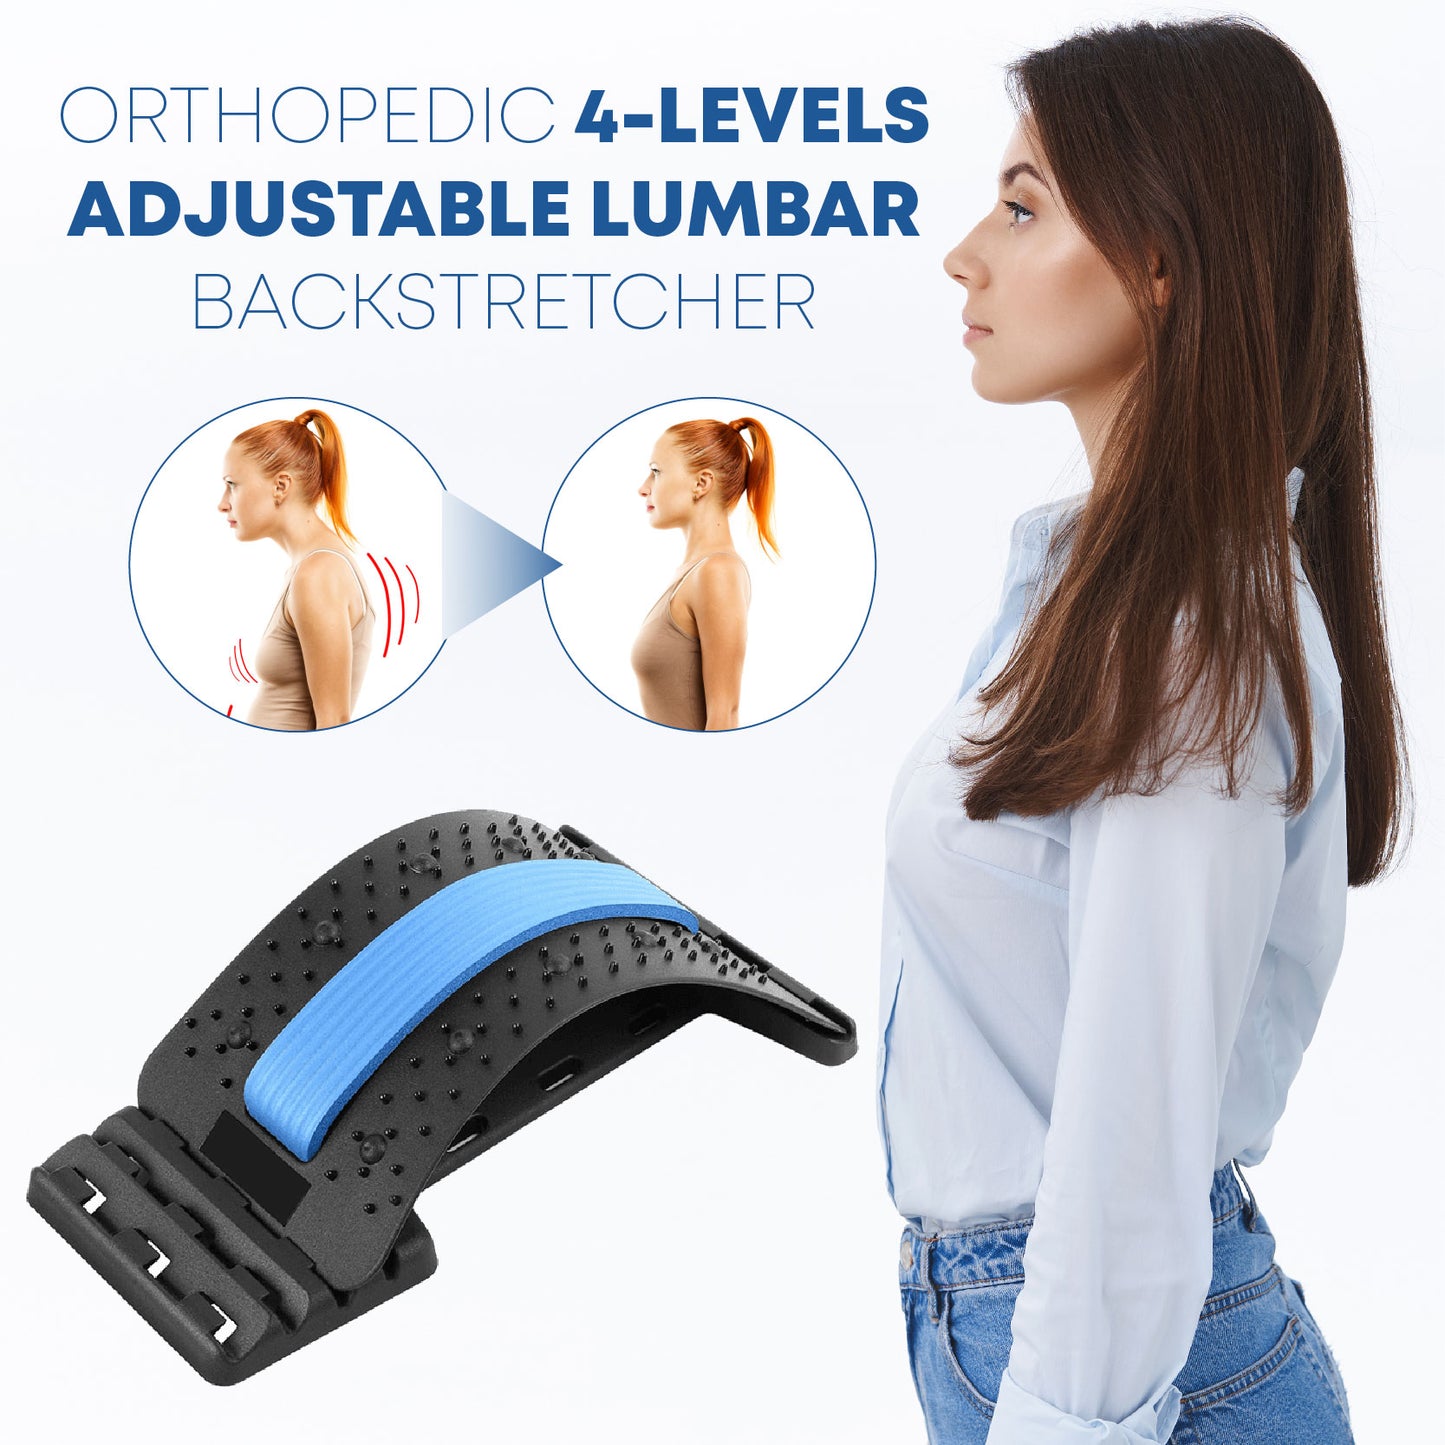 Orthopedic 4-Levels Adjustable Lumbar BackStretcher